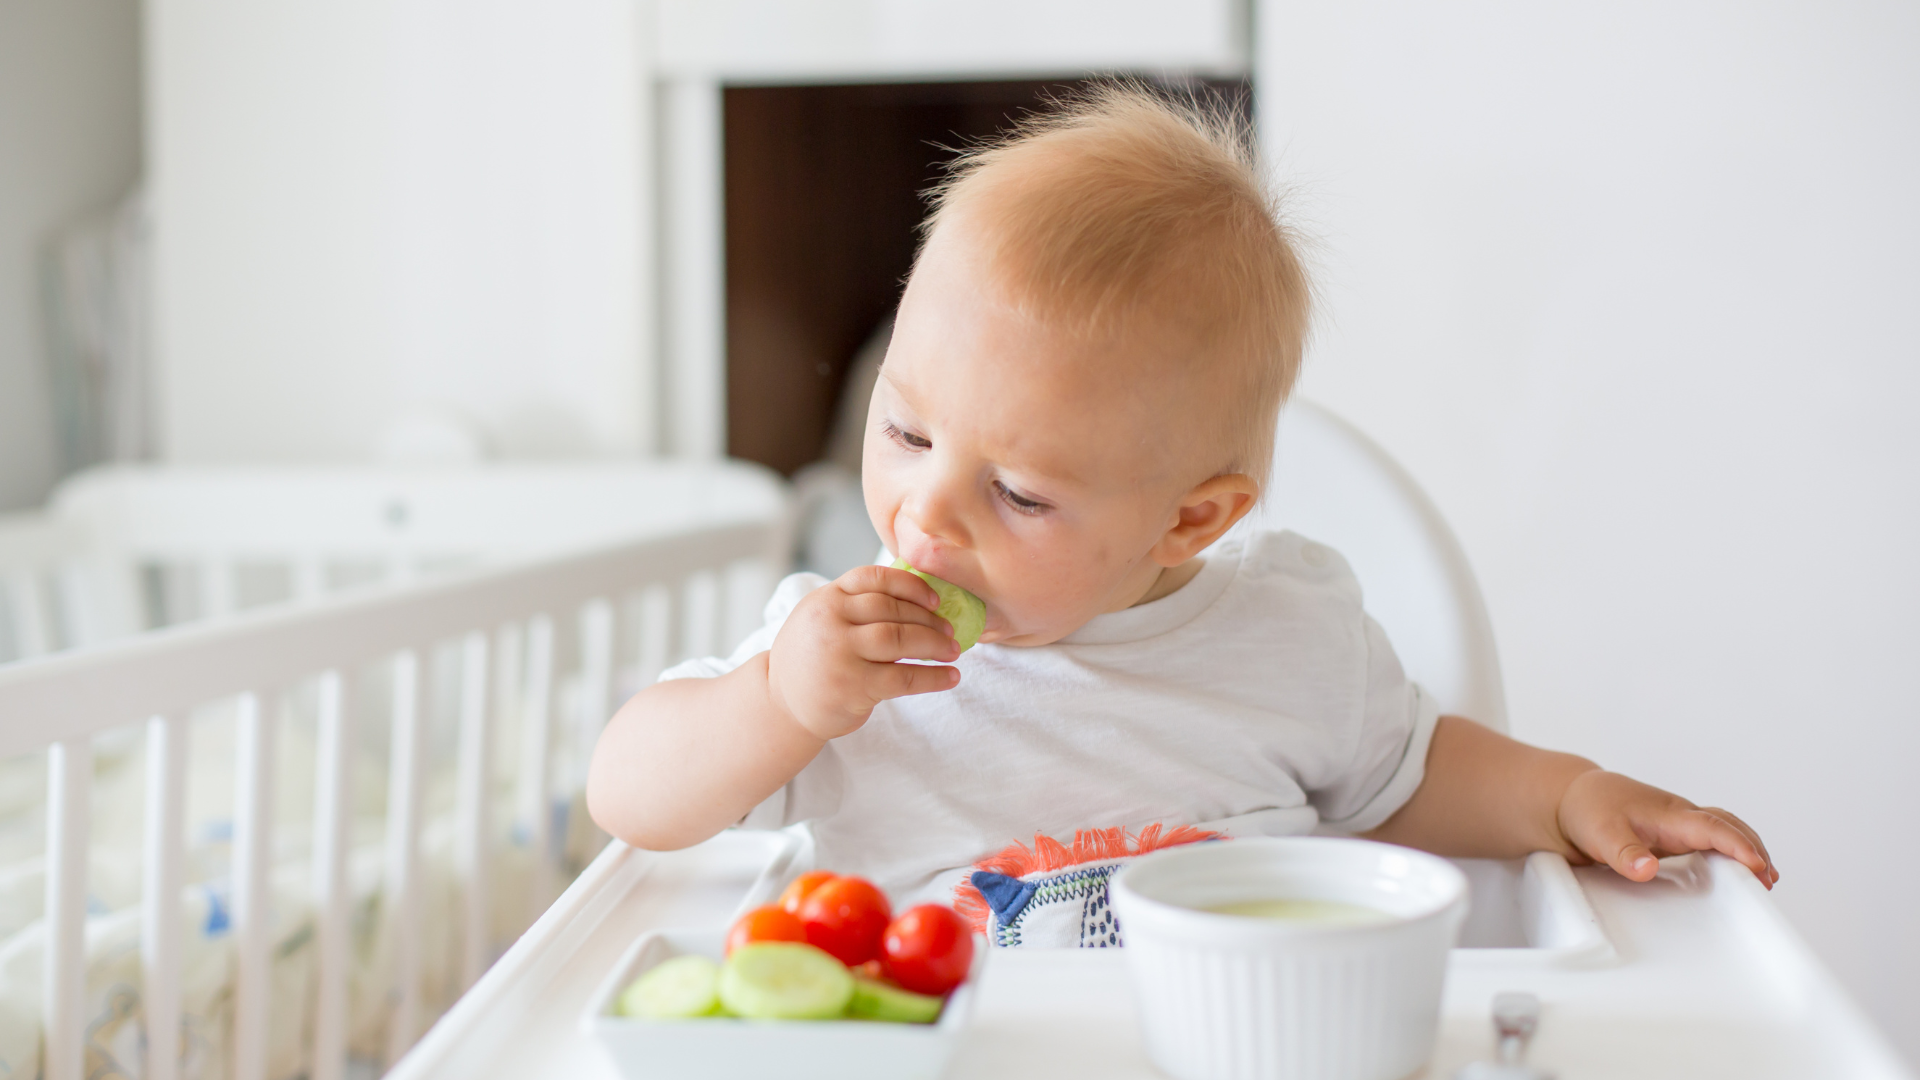 A joyful baby enjoying organic baby food